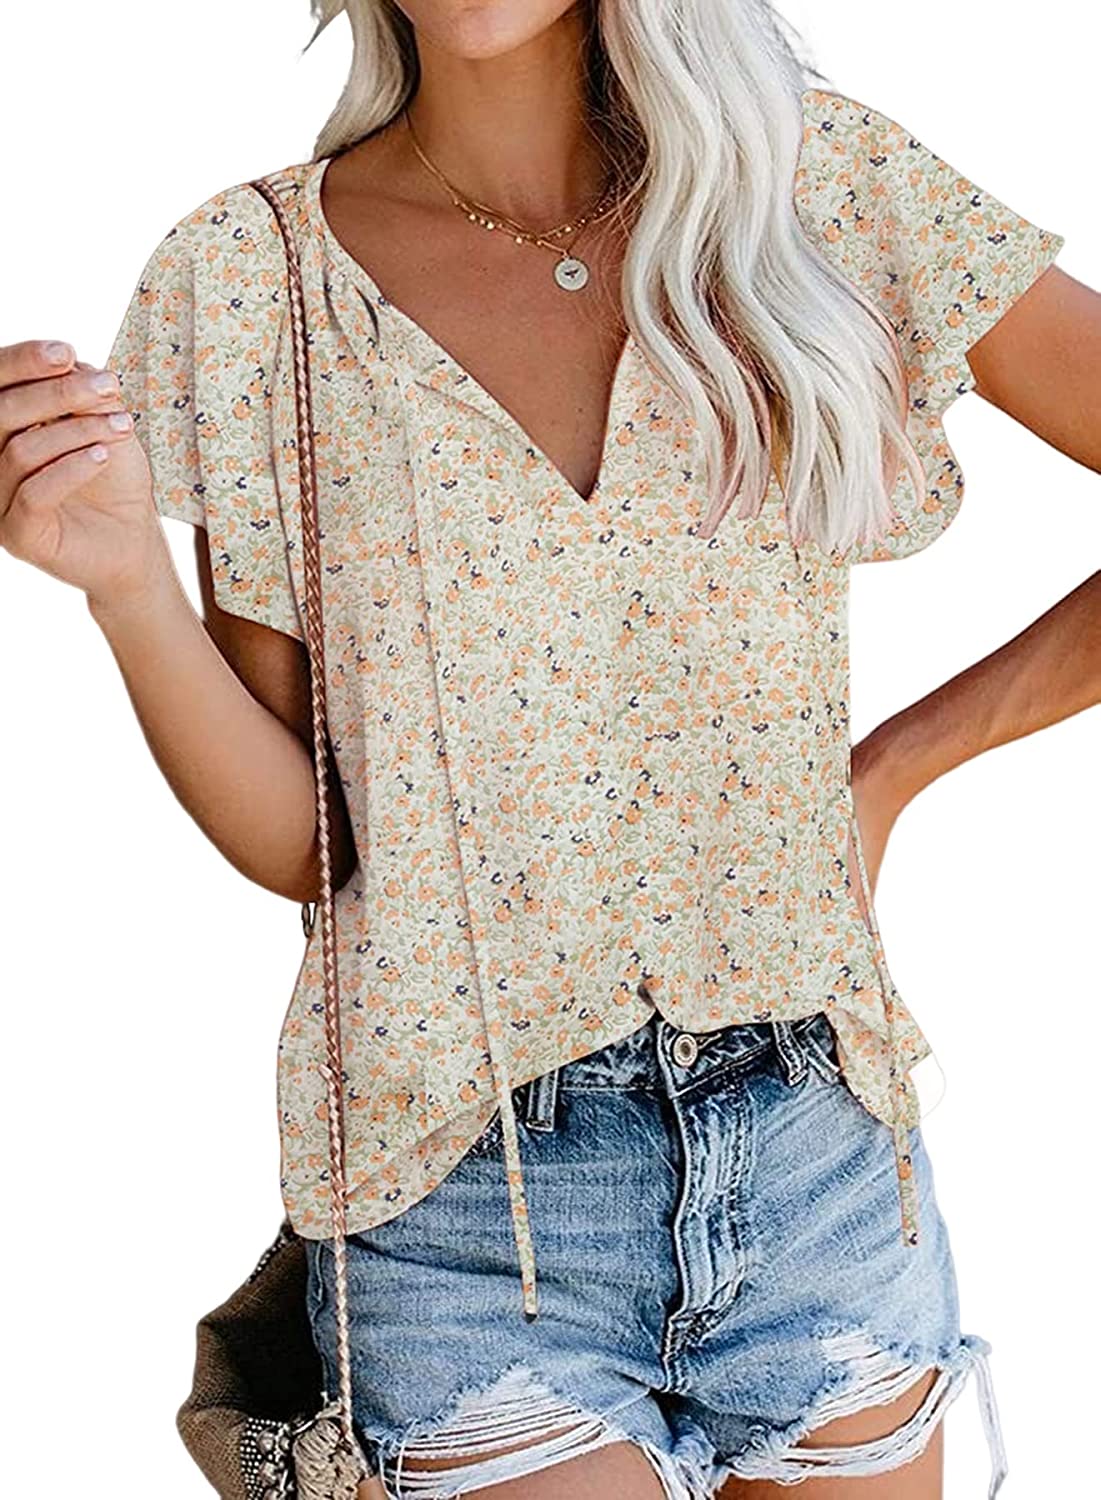 SimpleFun Women's Boho Tops Floral V Neck Short Sleeve Summer Blouse Shirts